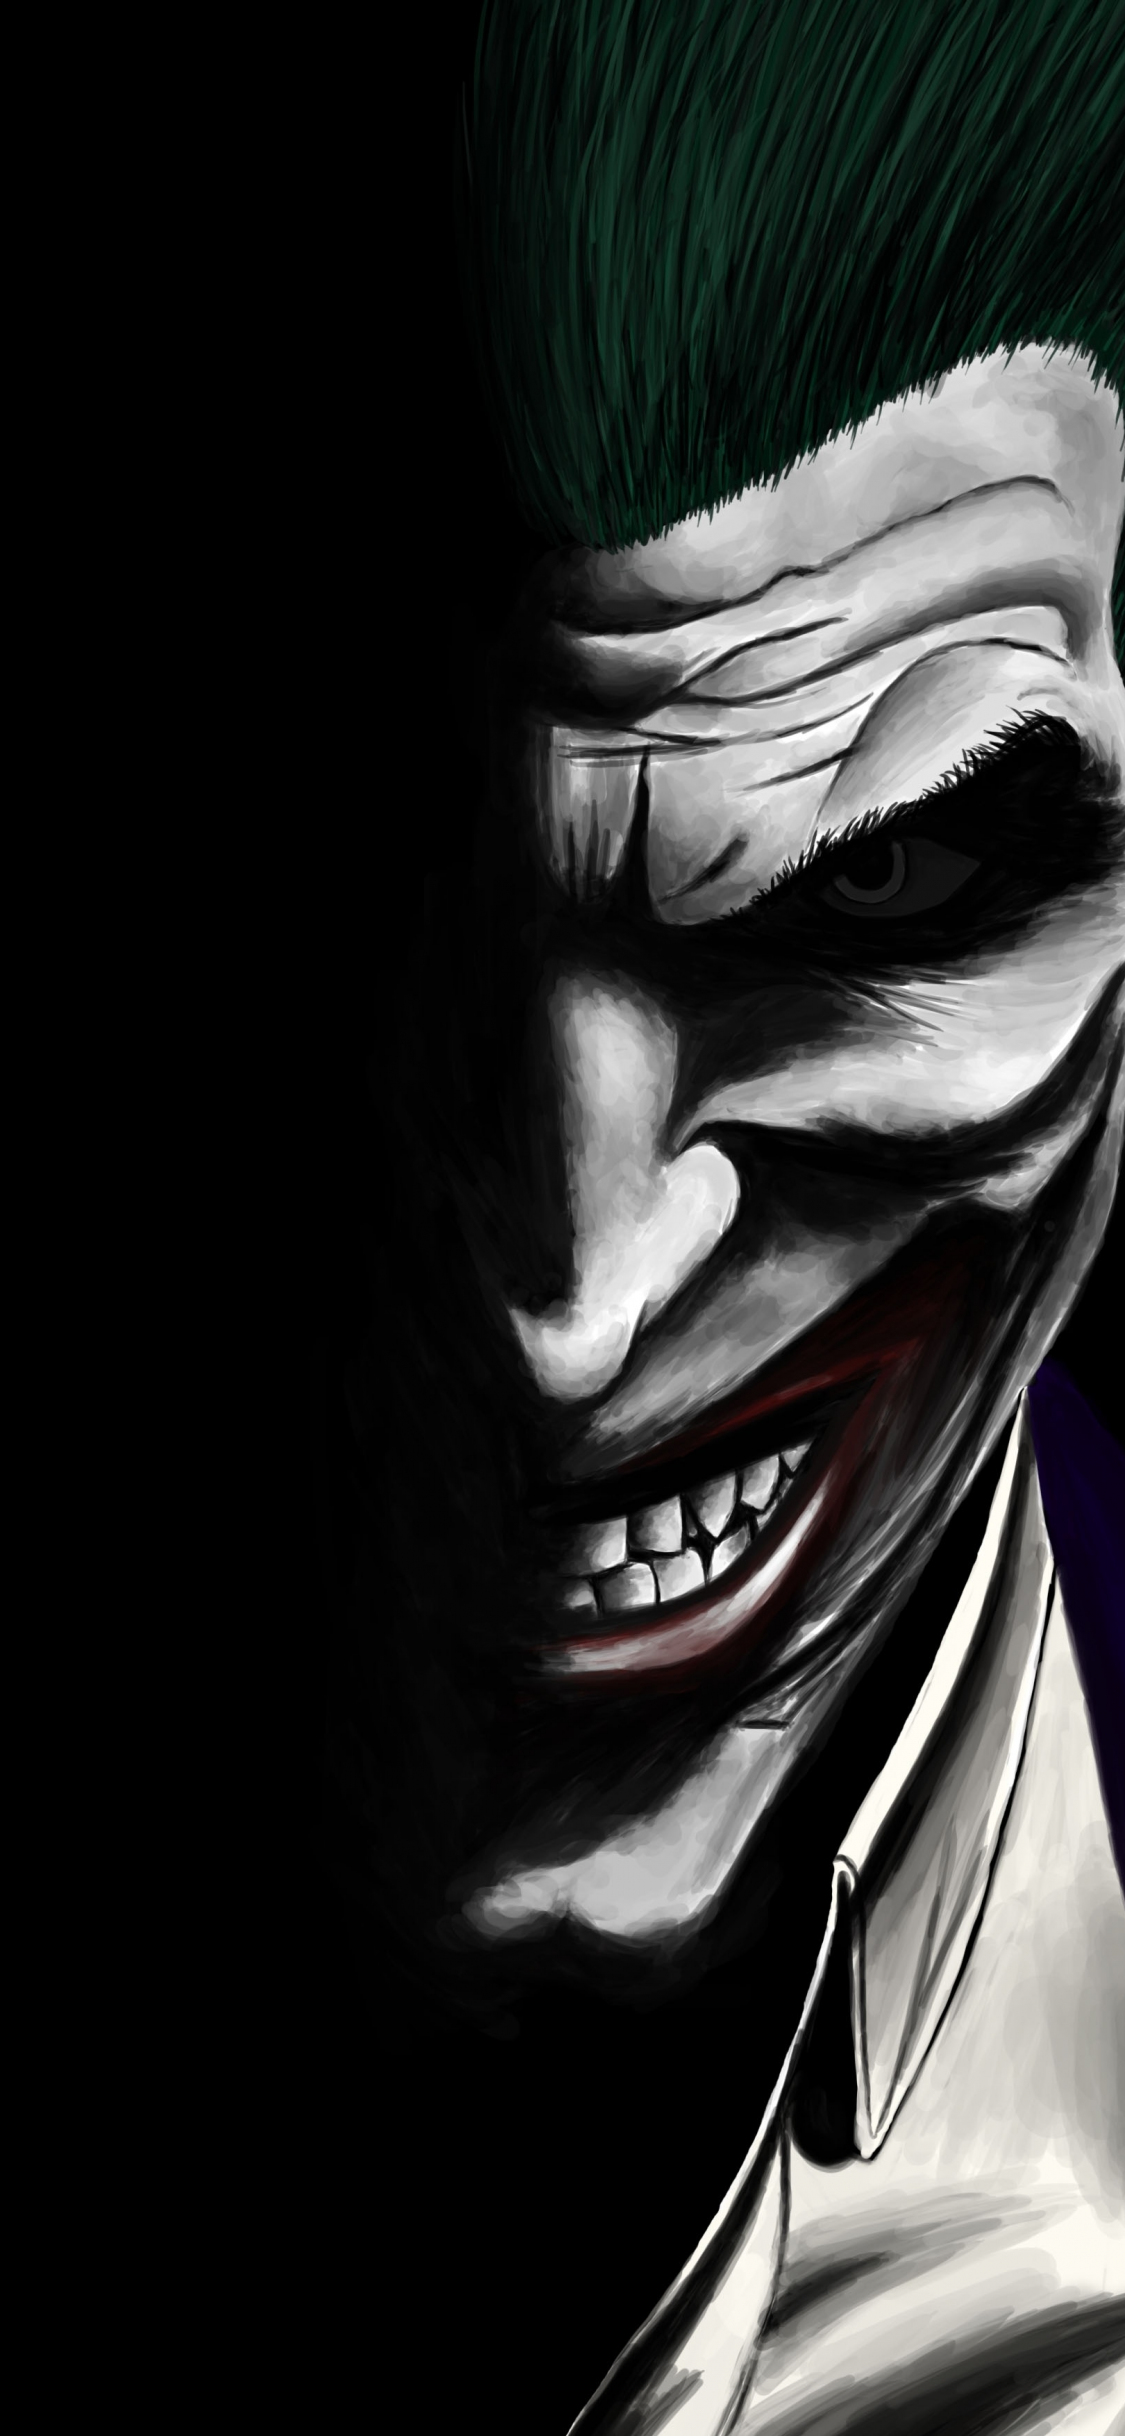 40 Gambar Joker Wallpaper Hd Iphone X terbaru 2020